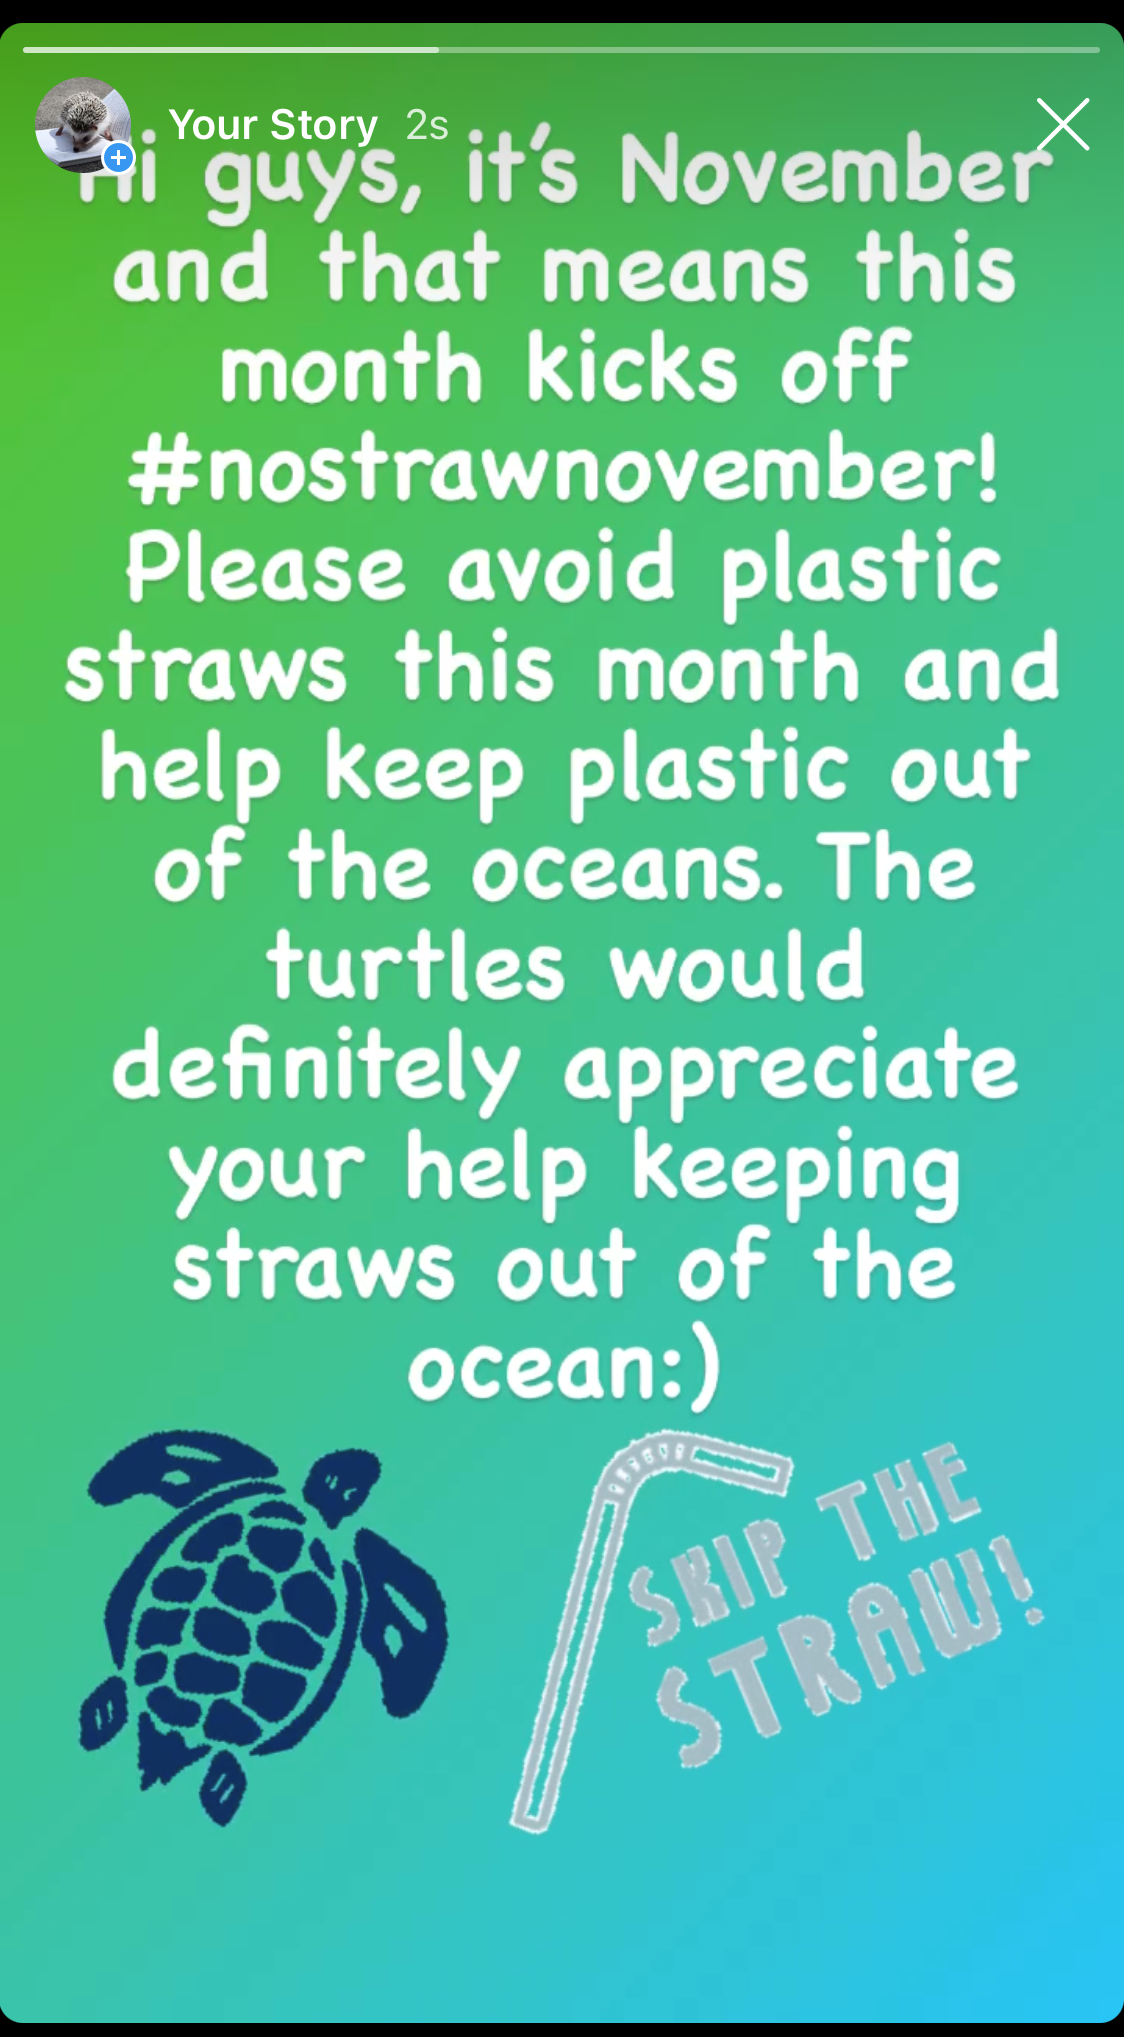 StubHub Center commits to reduce plastic straw consumption